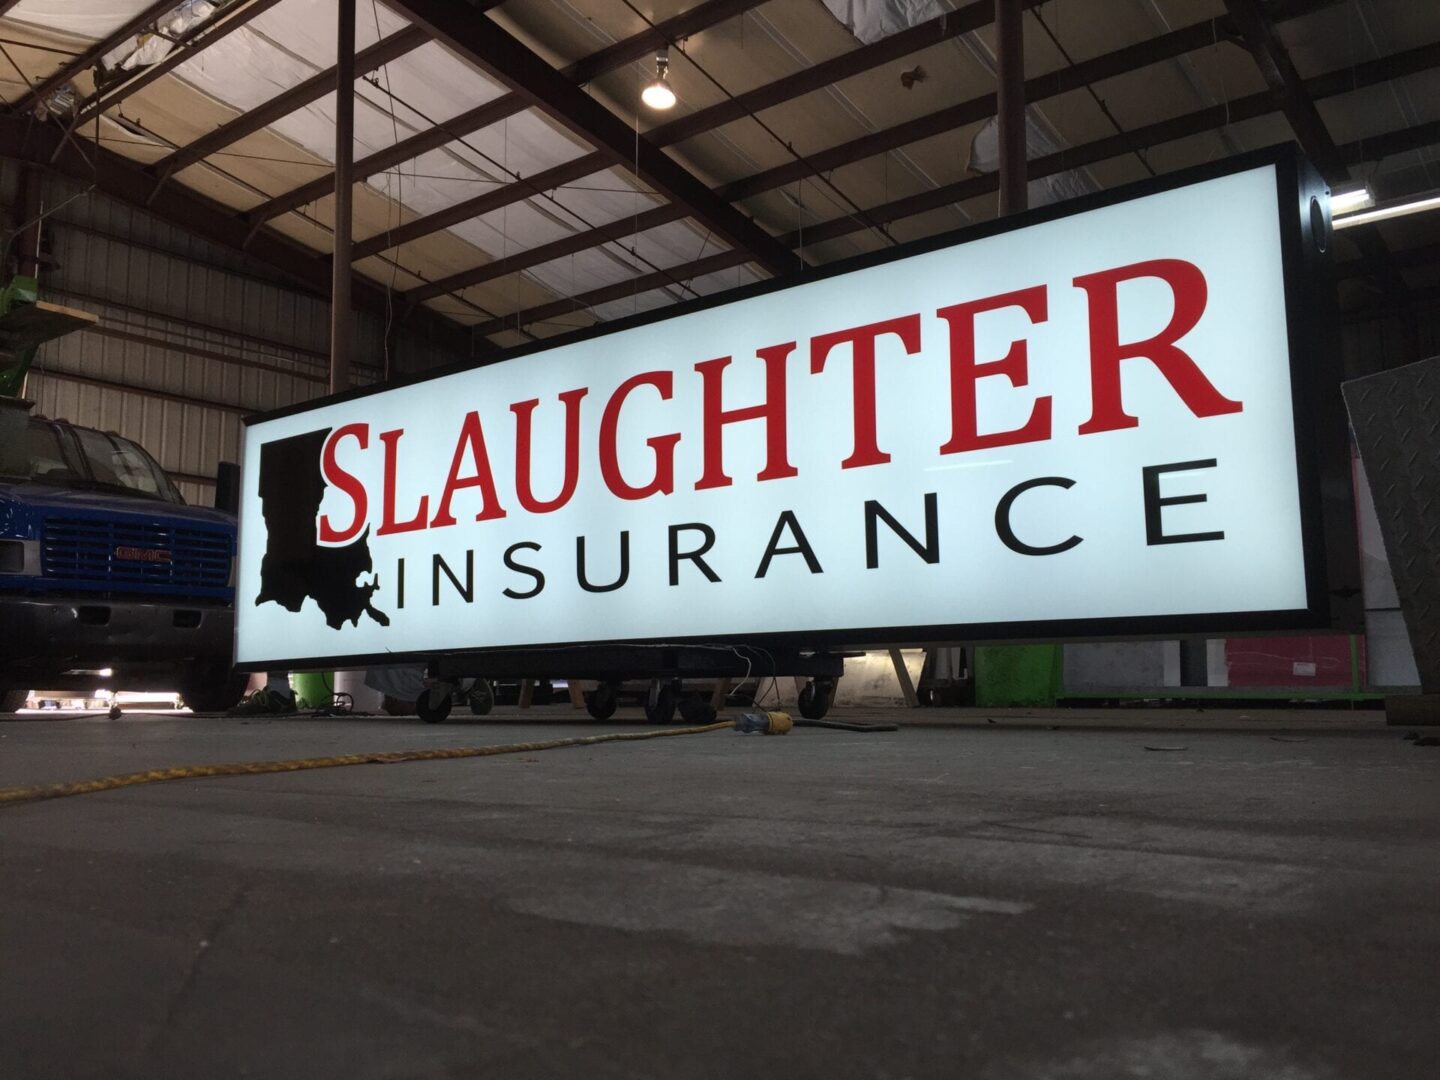 Slaughter Insurance Light box sign with led lights, double sided insurance company sign, pole sign, Pollock Louisiana, HLA Enterprises Inc